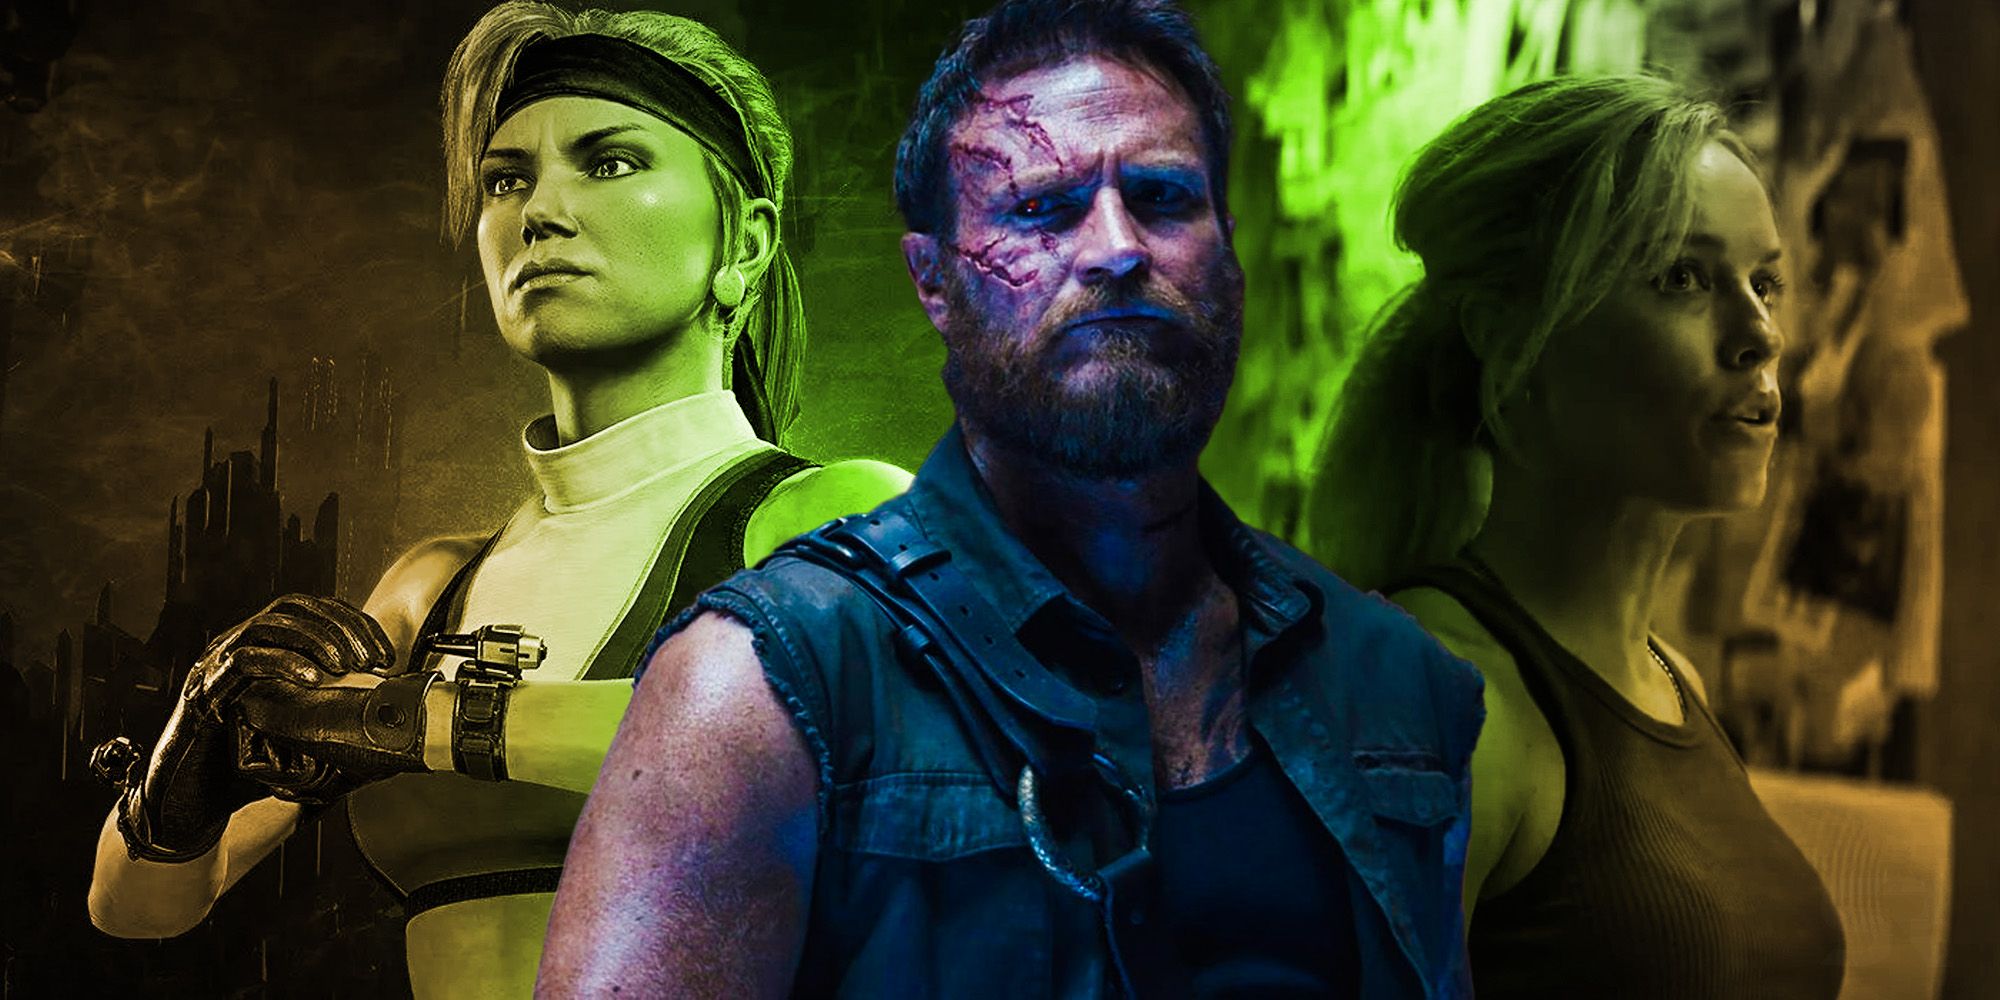 Sonya, Kano, and Jax get killer new retro-style Mortal Kombat